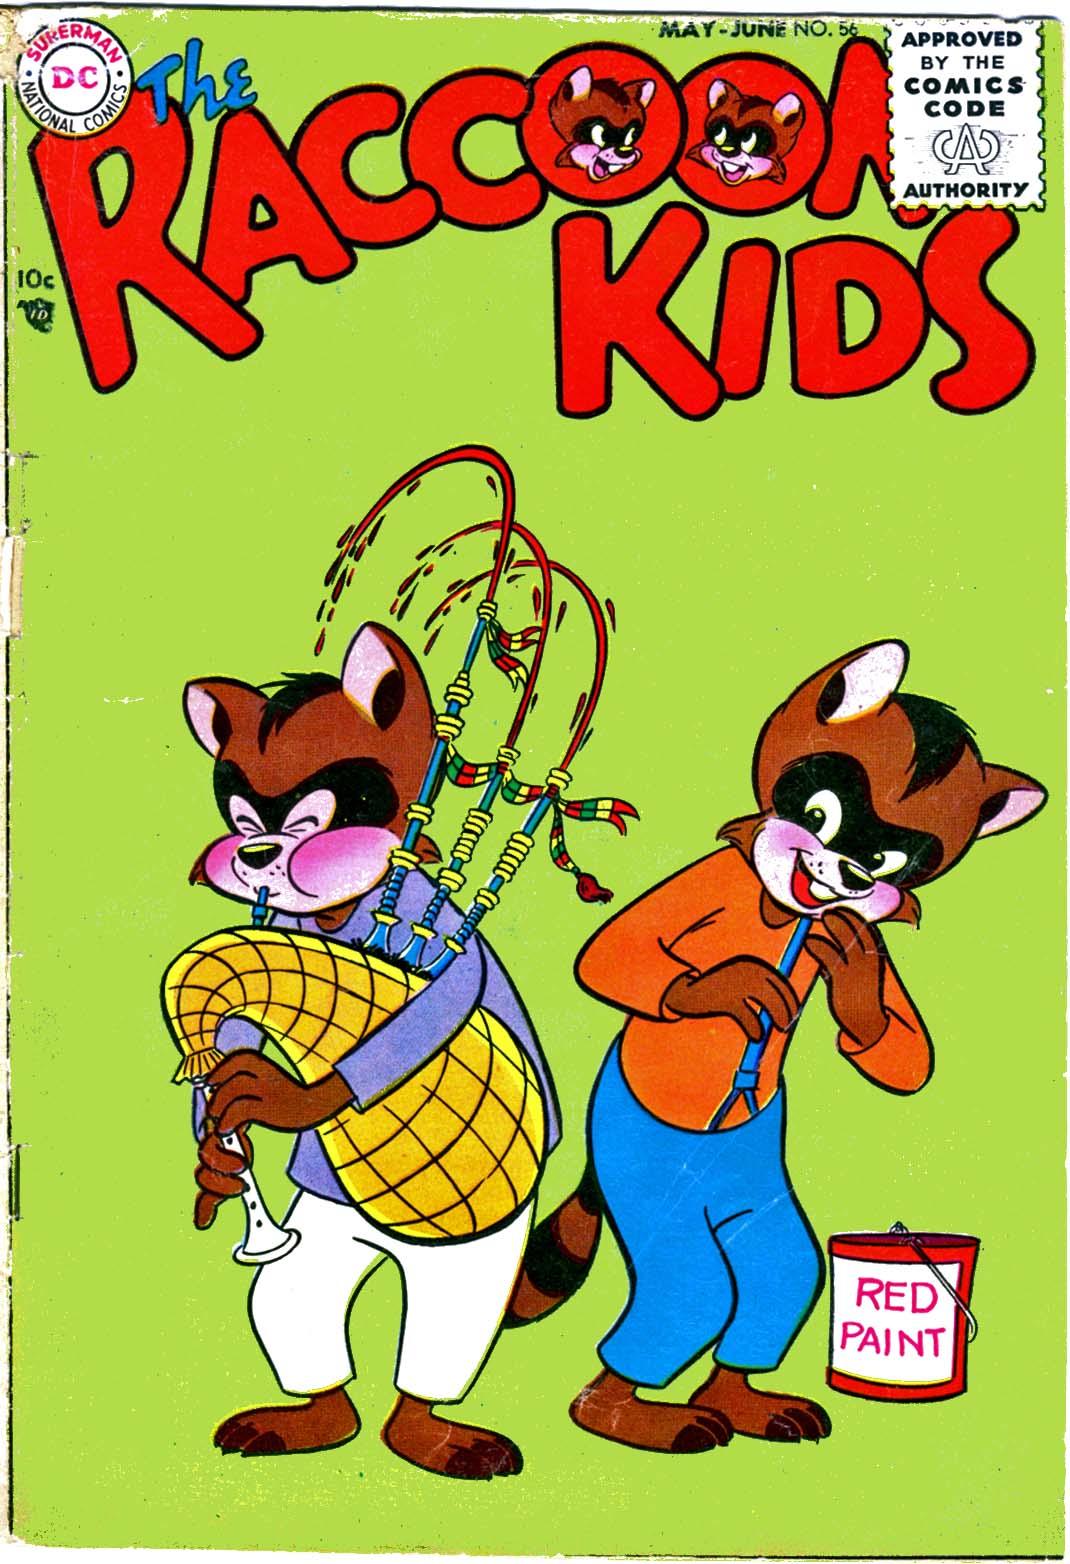 Raccoon Kids Vol. 1 #56